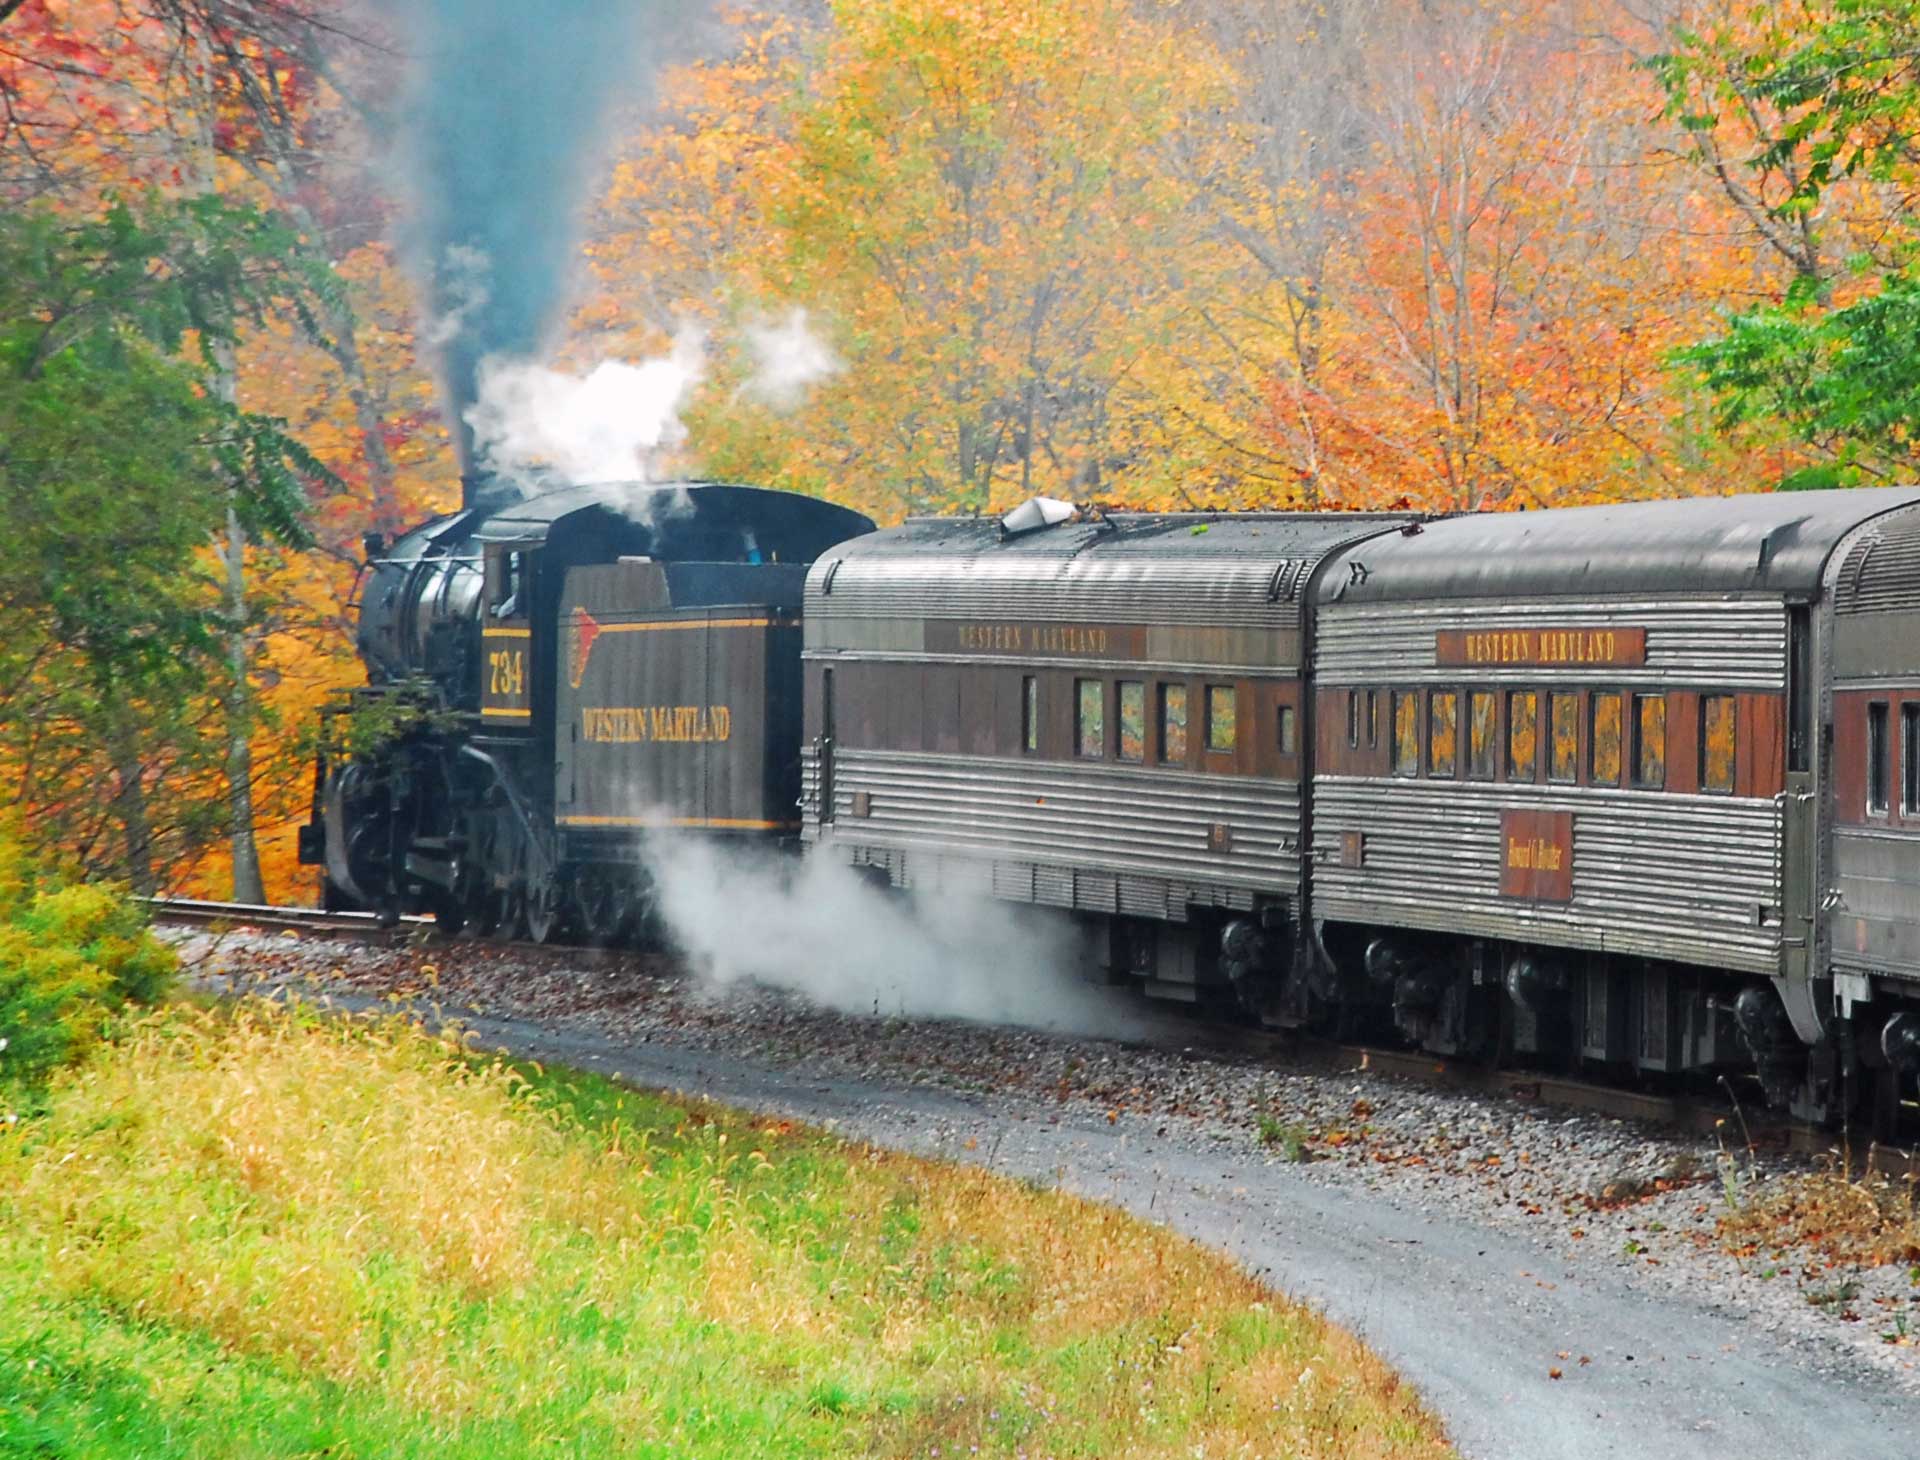 Fall Foliage Trains | Catch a fall foliage train ride